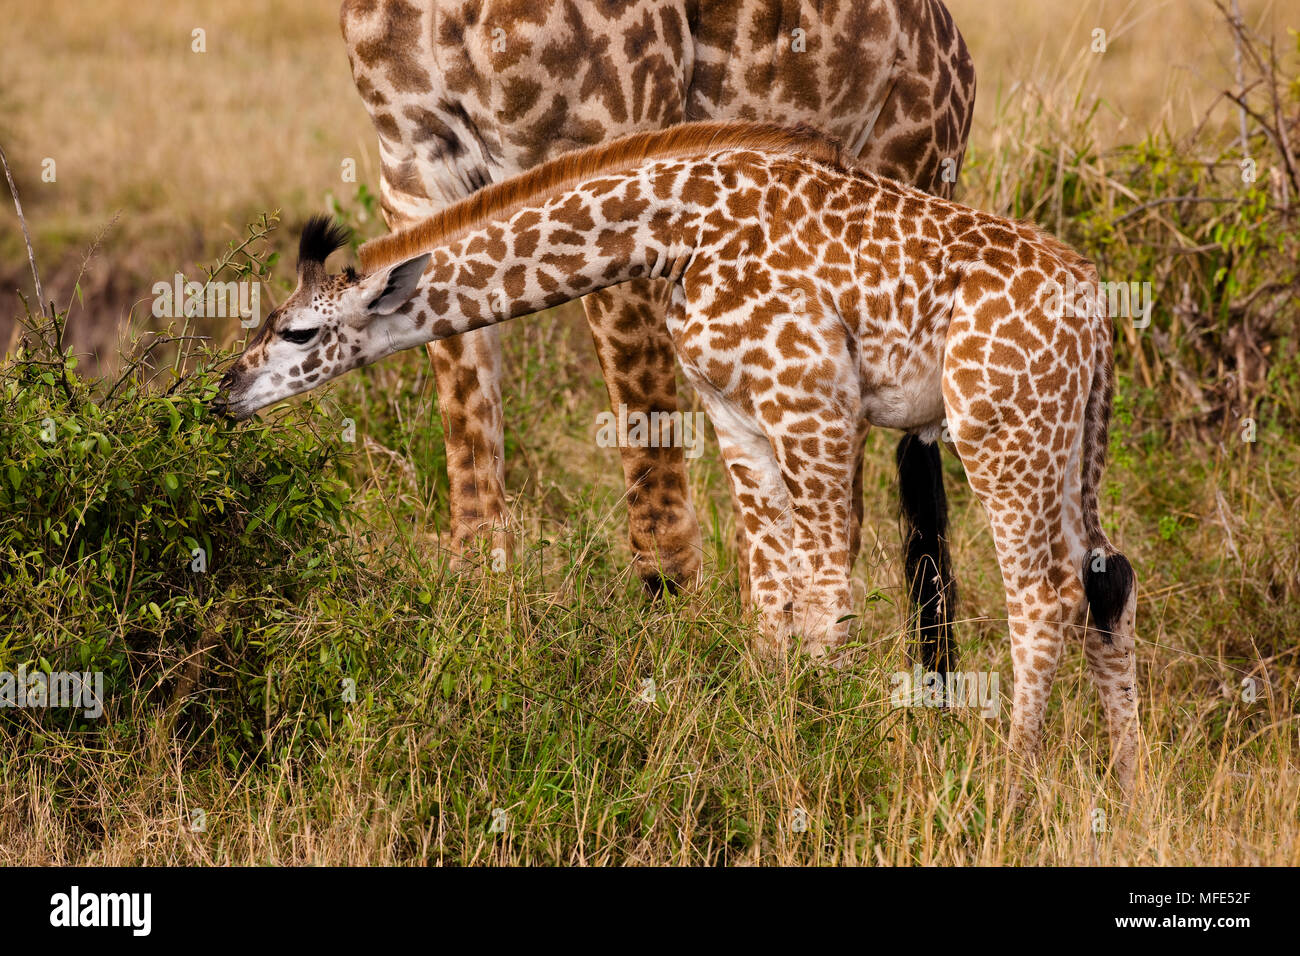 Junge gemeinsame Giraffe mit Mutter, Giraffe camelopardalis, Masai Mara, Kenia. Stockfoto